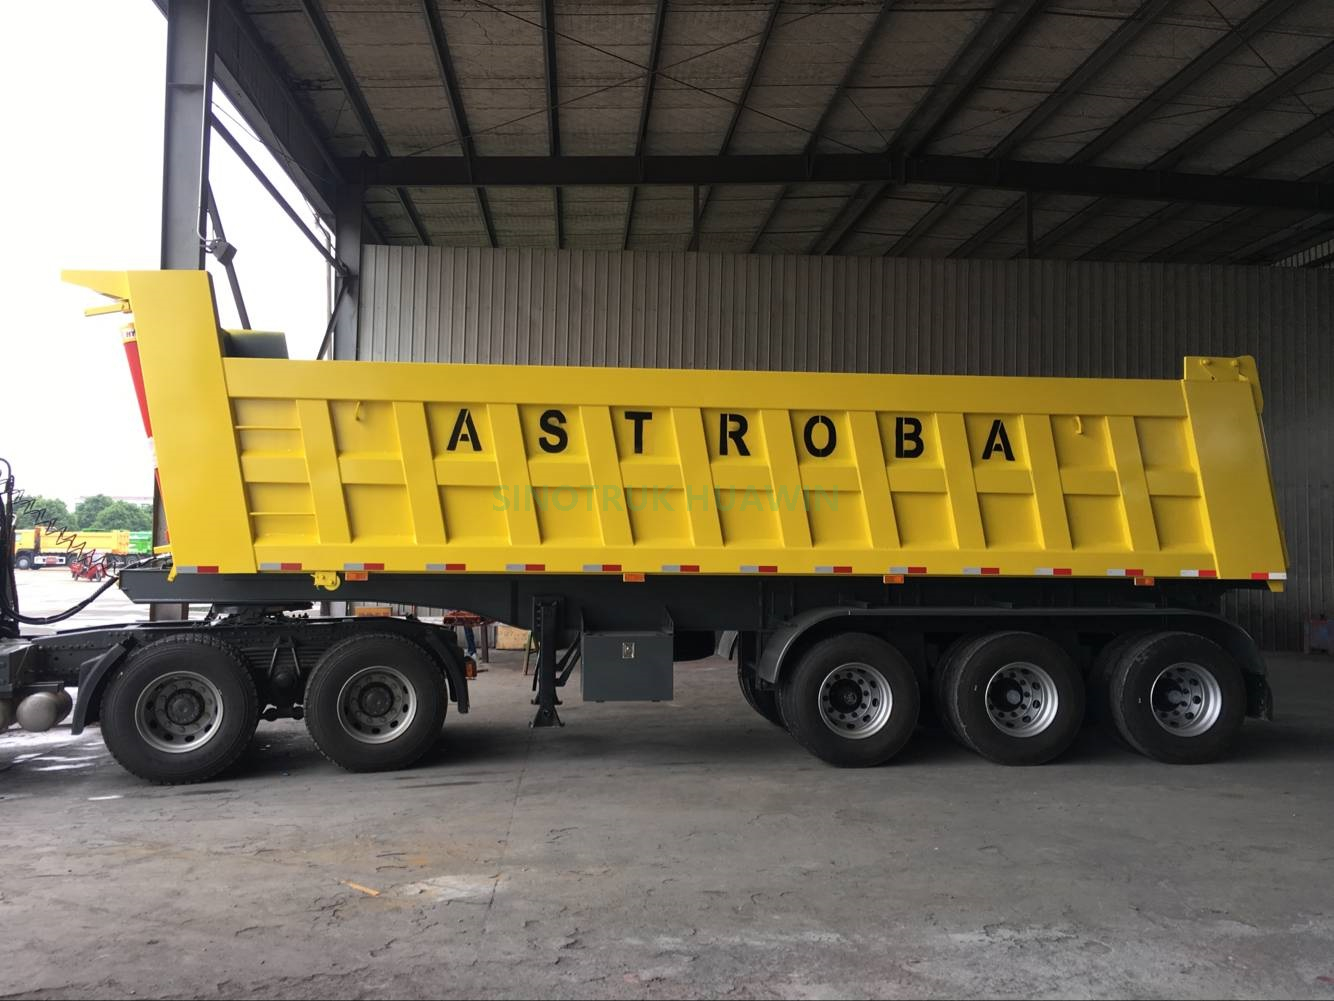 3 Axle 40 Tons Sinotruk Huawin Mining Dumper Dump Tipper Semi Trailer